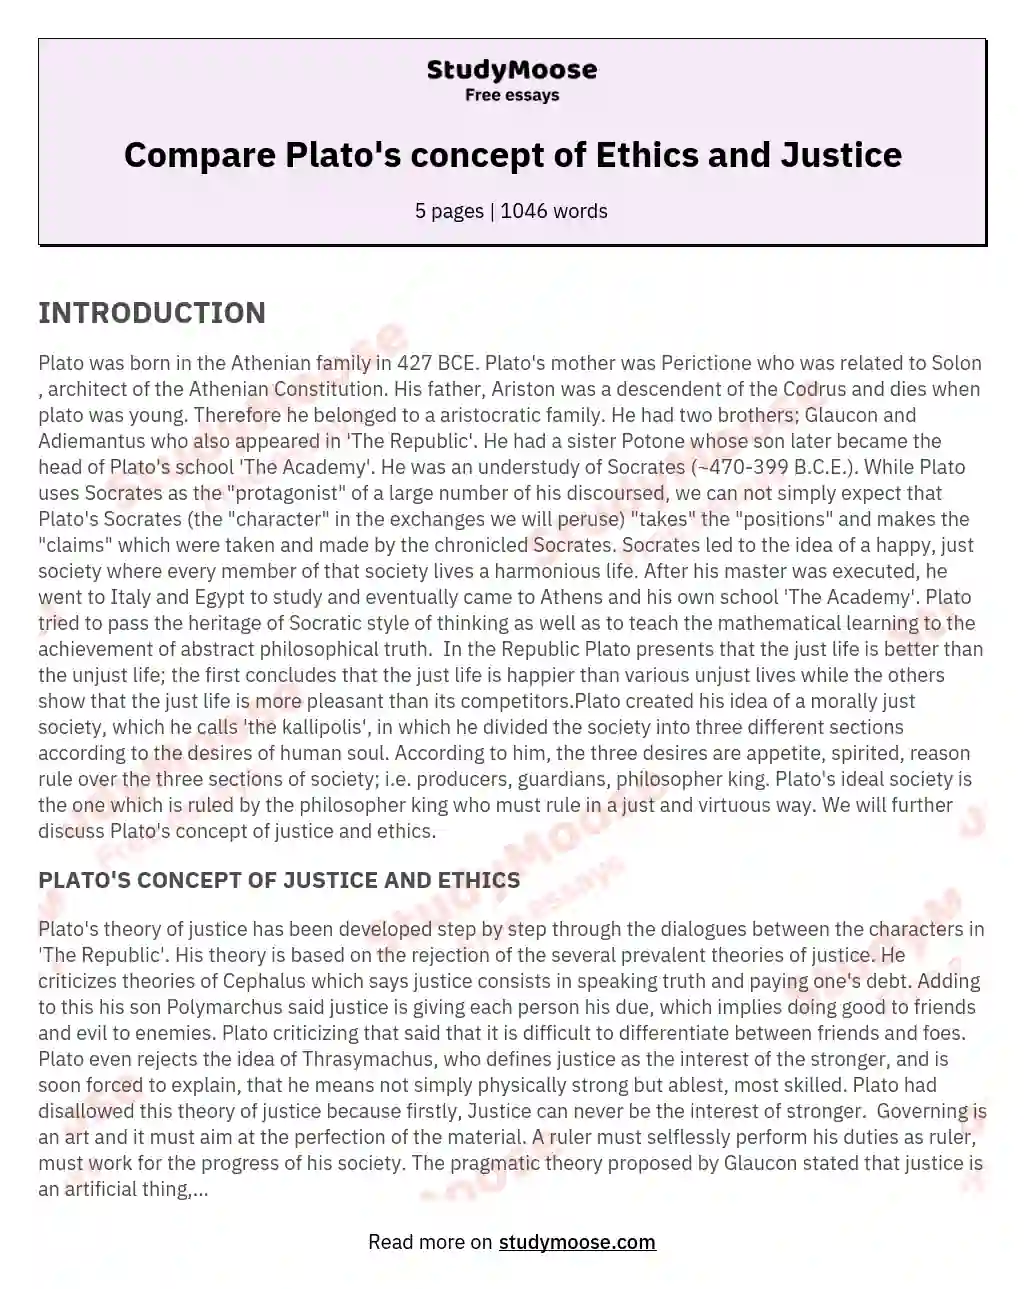 Compare Plato's concept of Ethics and Justice